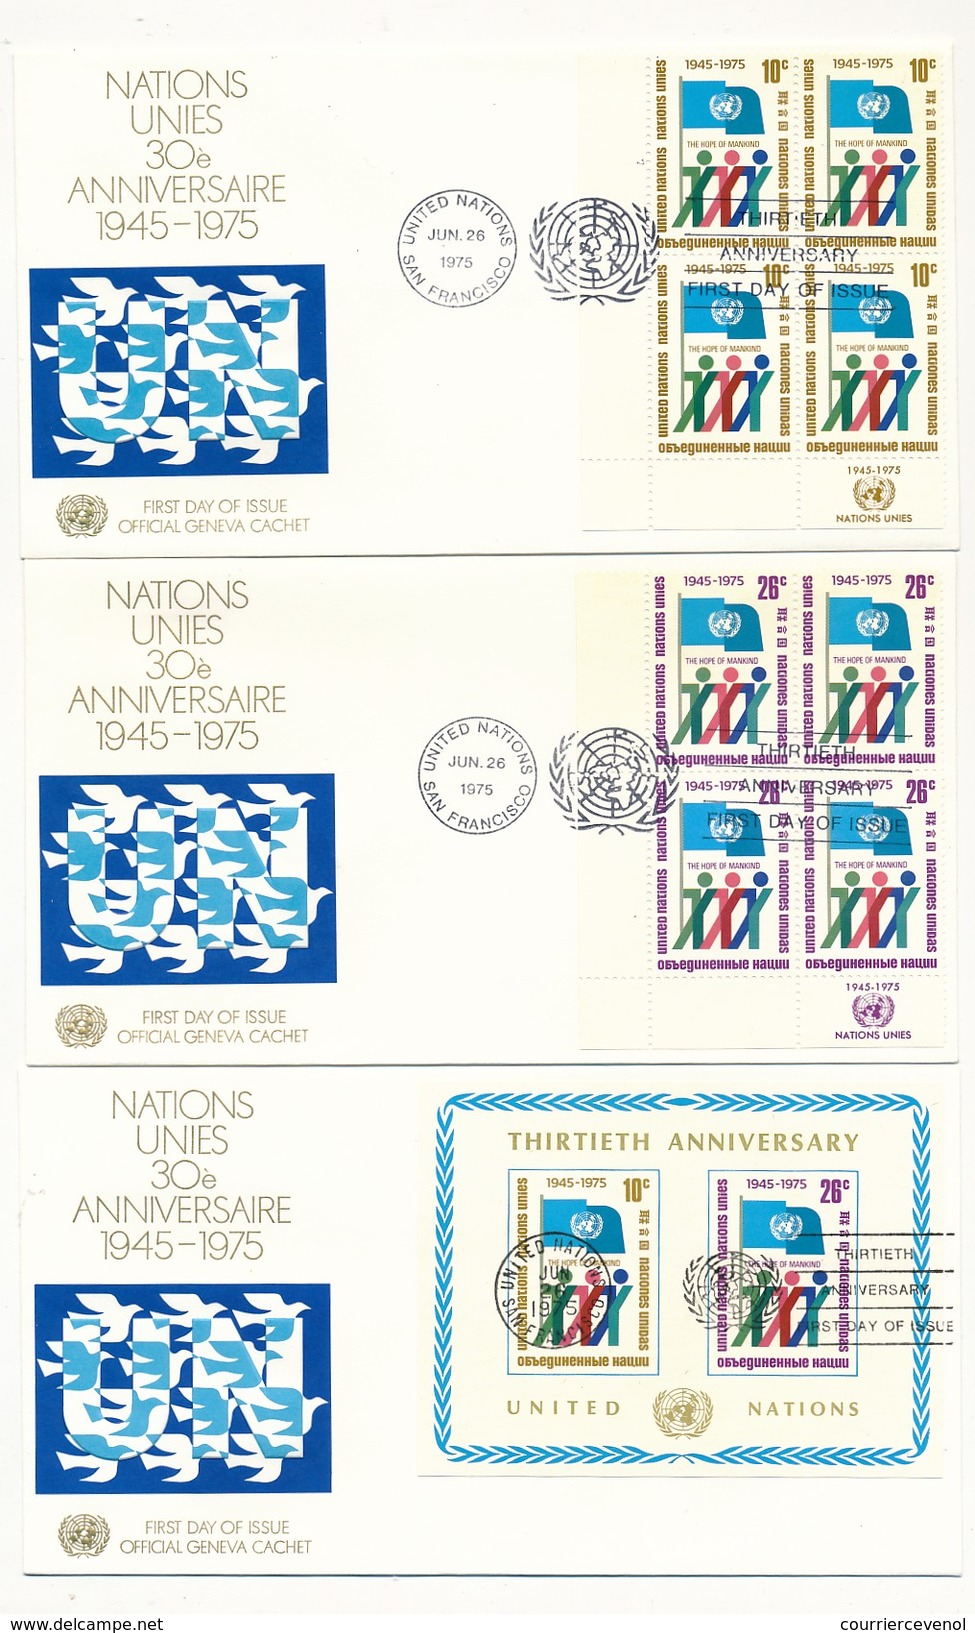 NATIONS UNIES - 16 Enveloppes FDC - 30eme Anniversaire 1975 New York / San Francisco / Genève - ONU